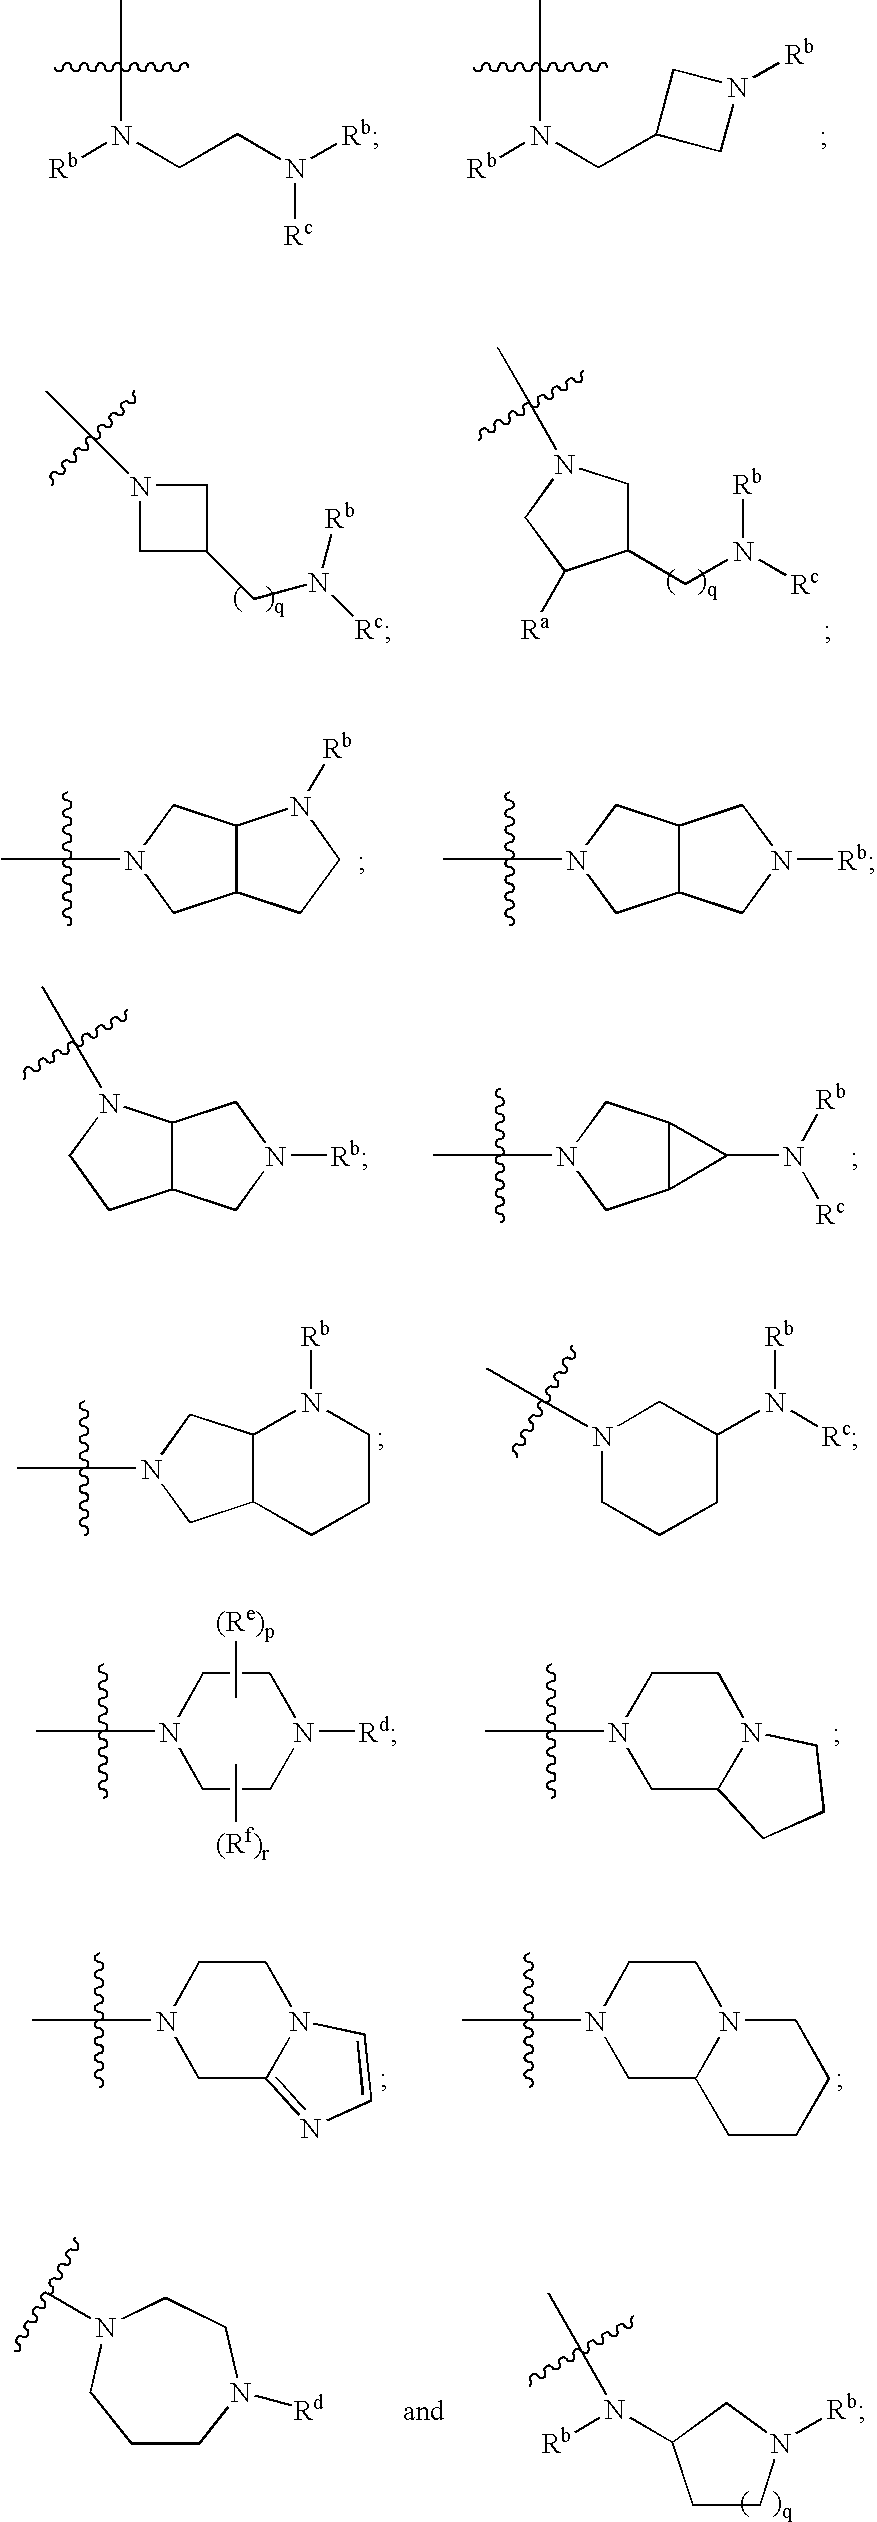 Thieno- and furo-pyrimidine modulators of the histamine H4 receptor